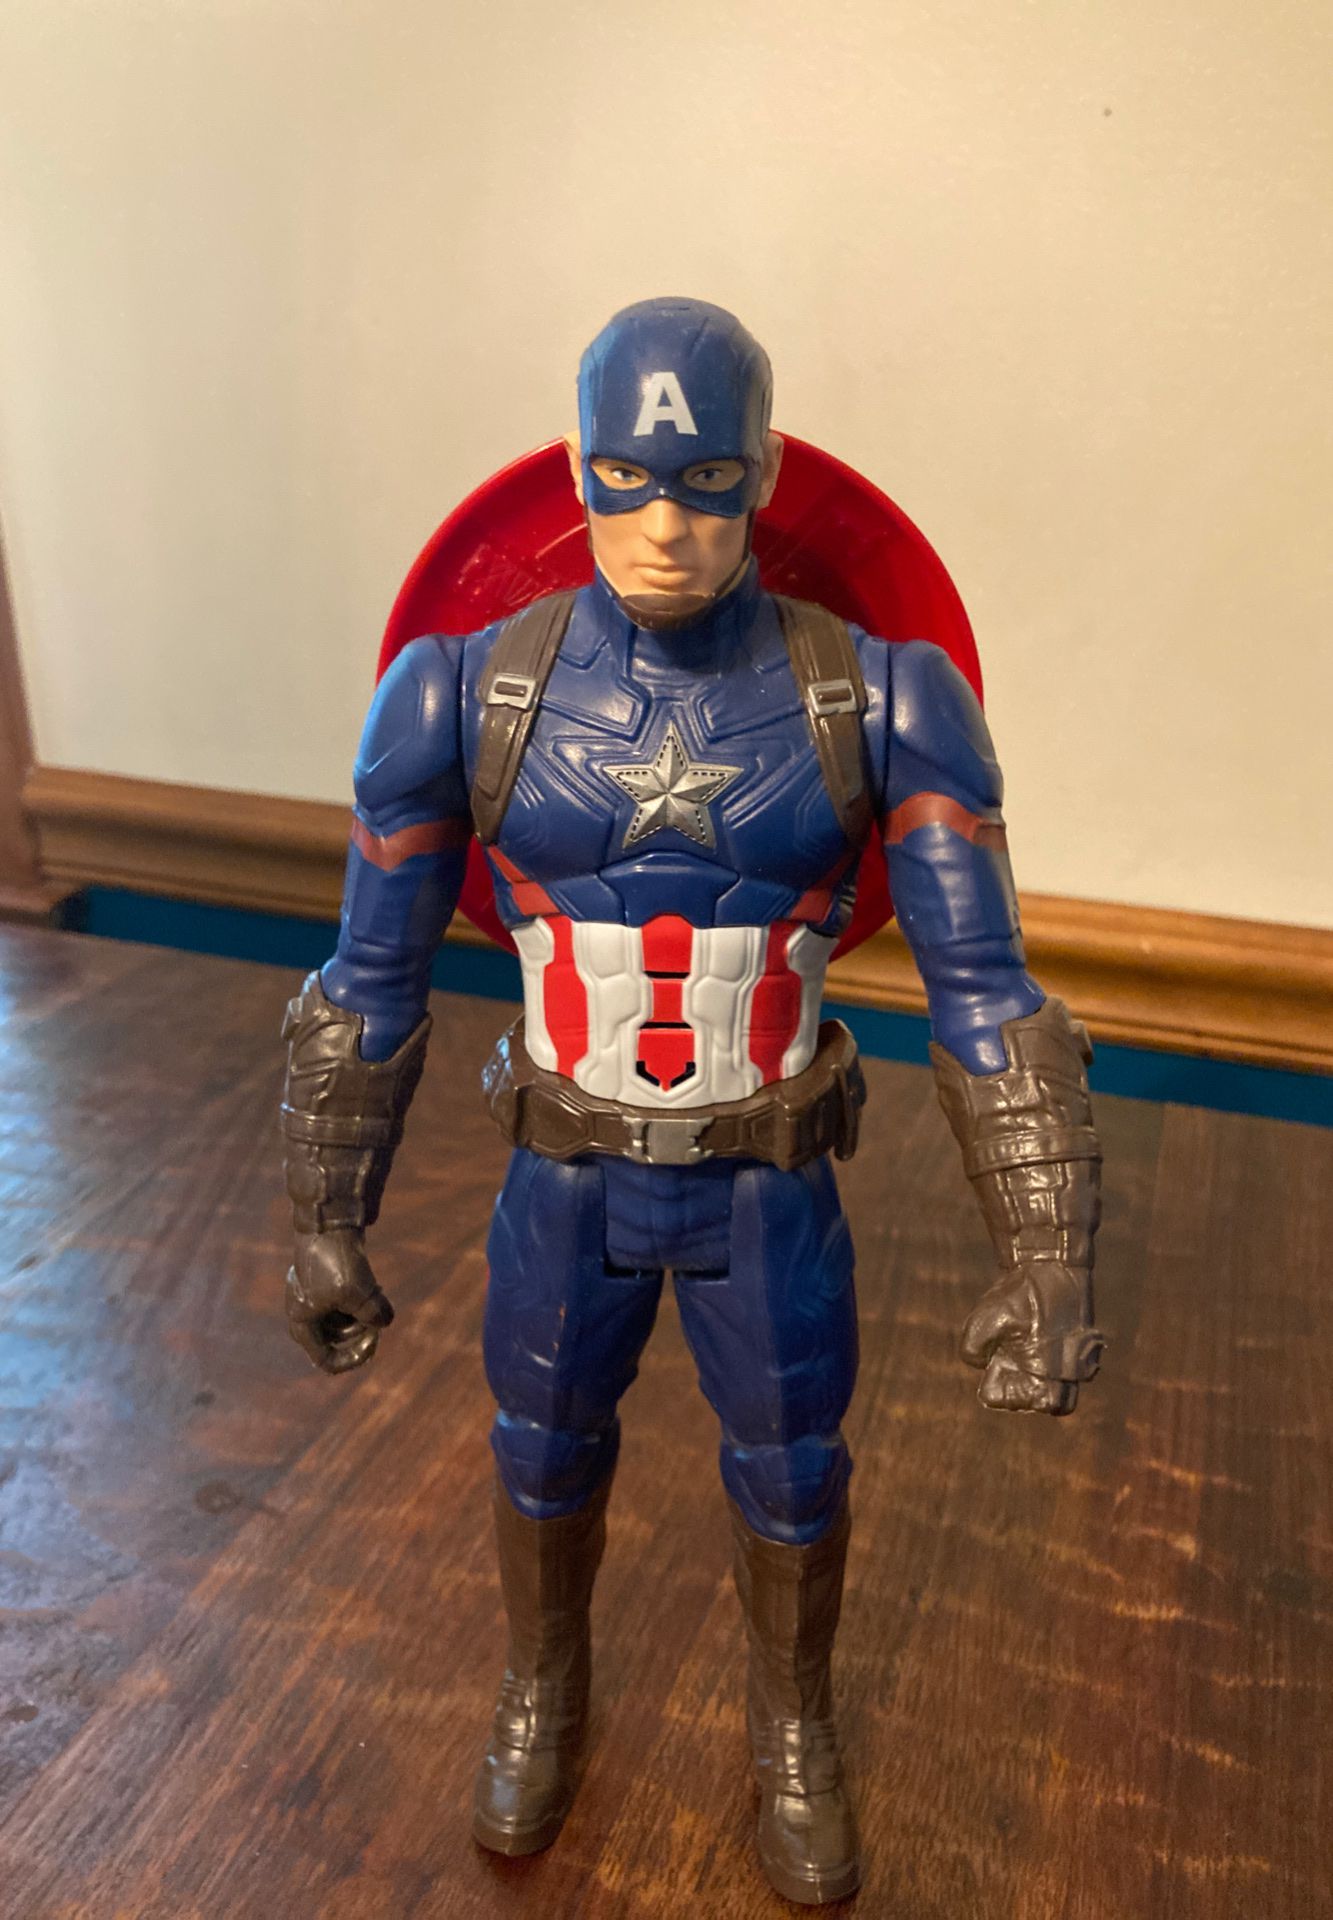 Captain America toy